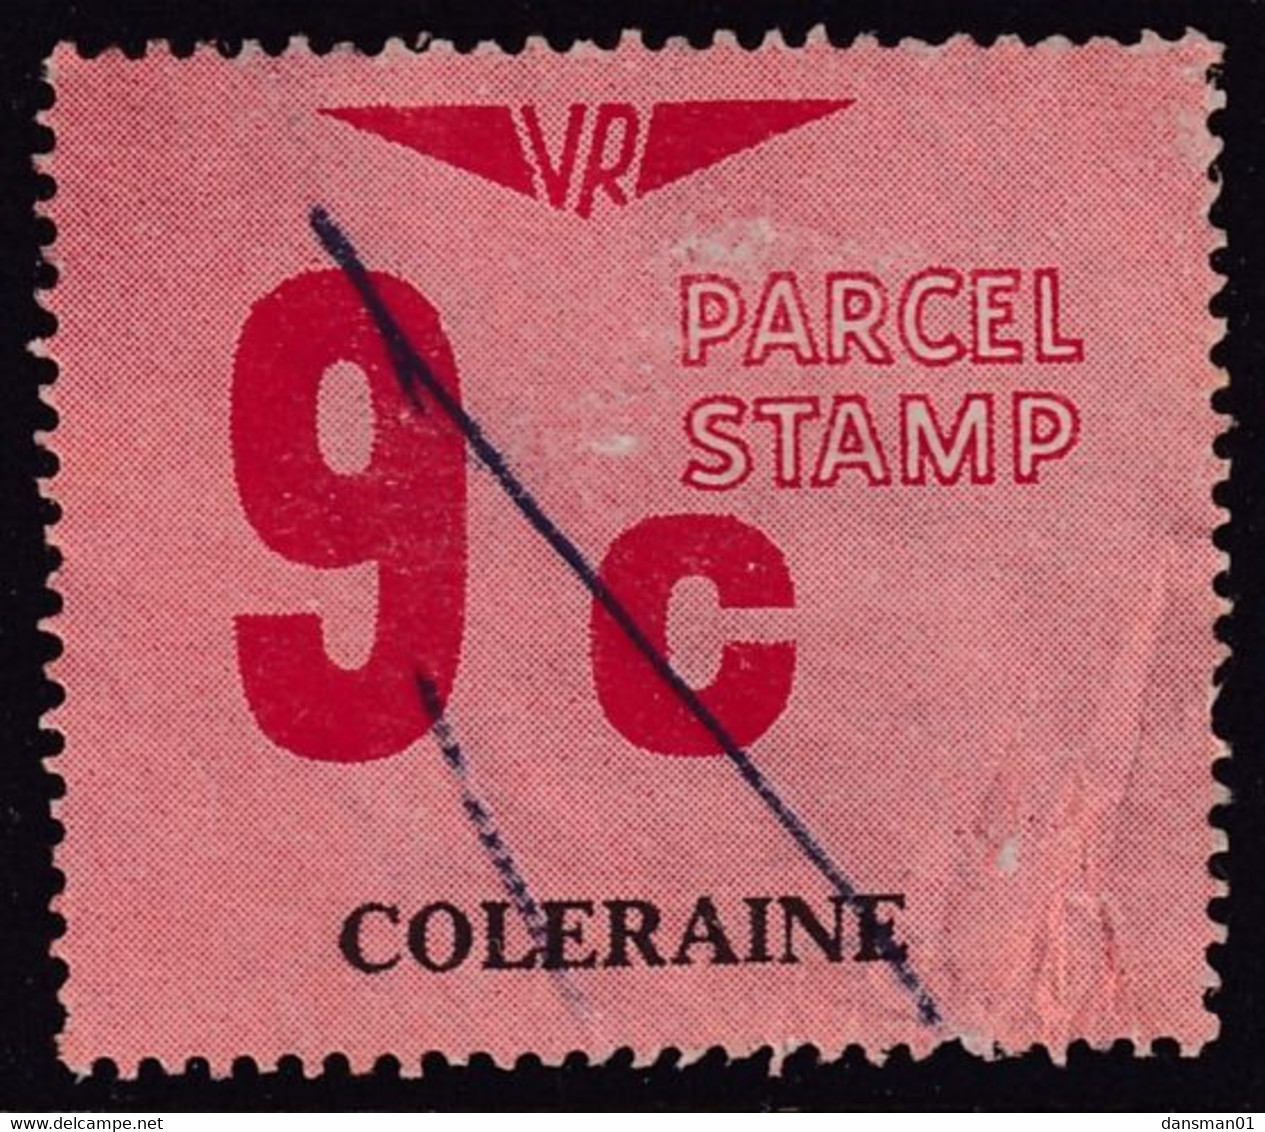 Victoria 1966 Railway Parcel Stamp 9c COLERAINE Used - Variétés Et Curiosités